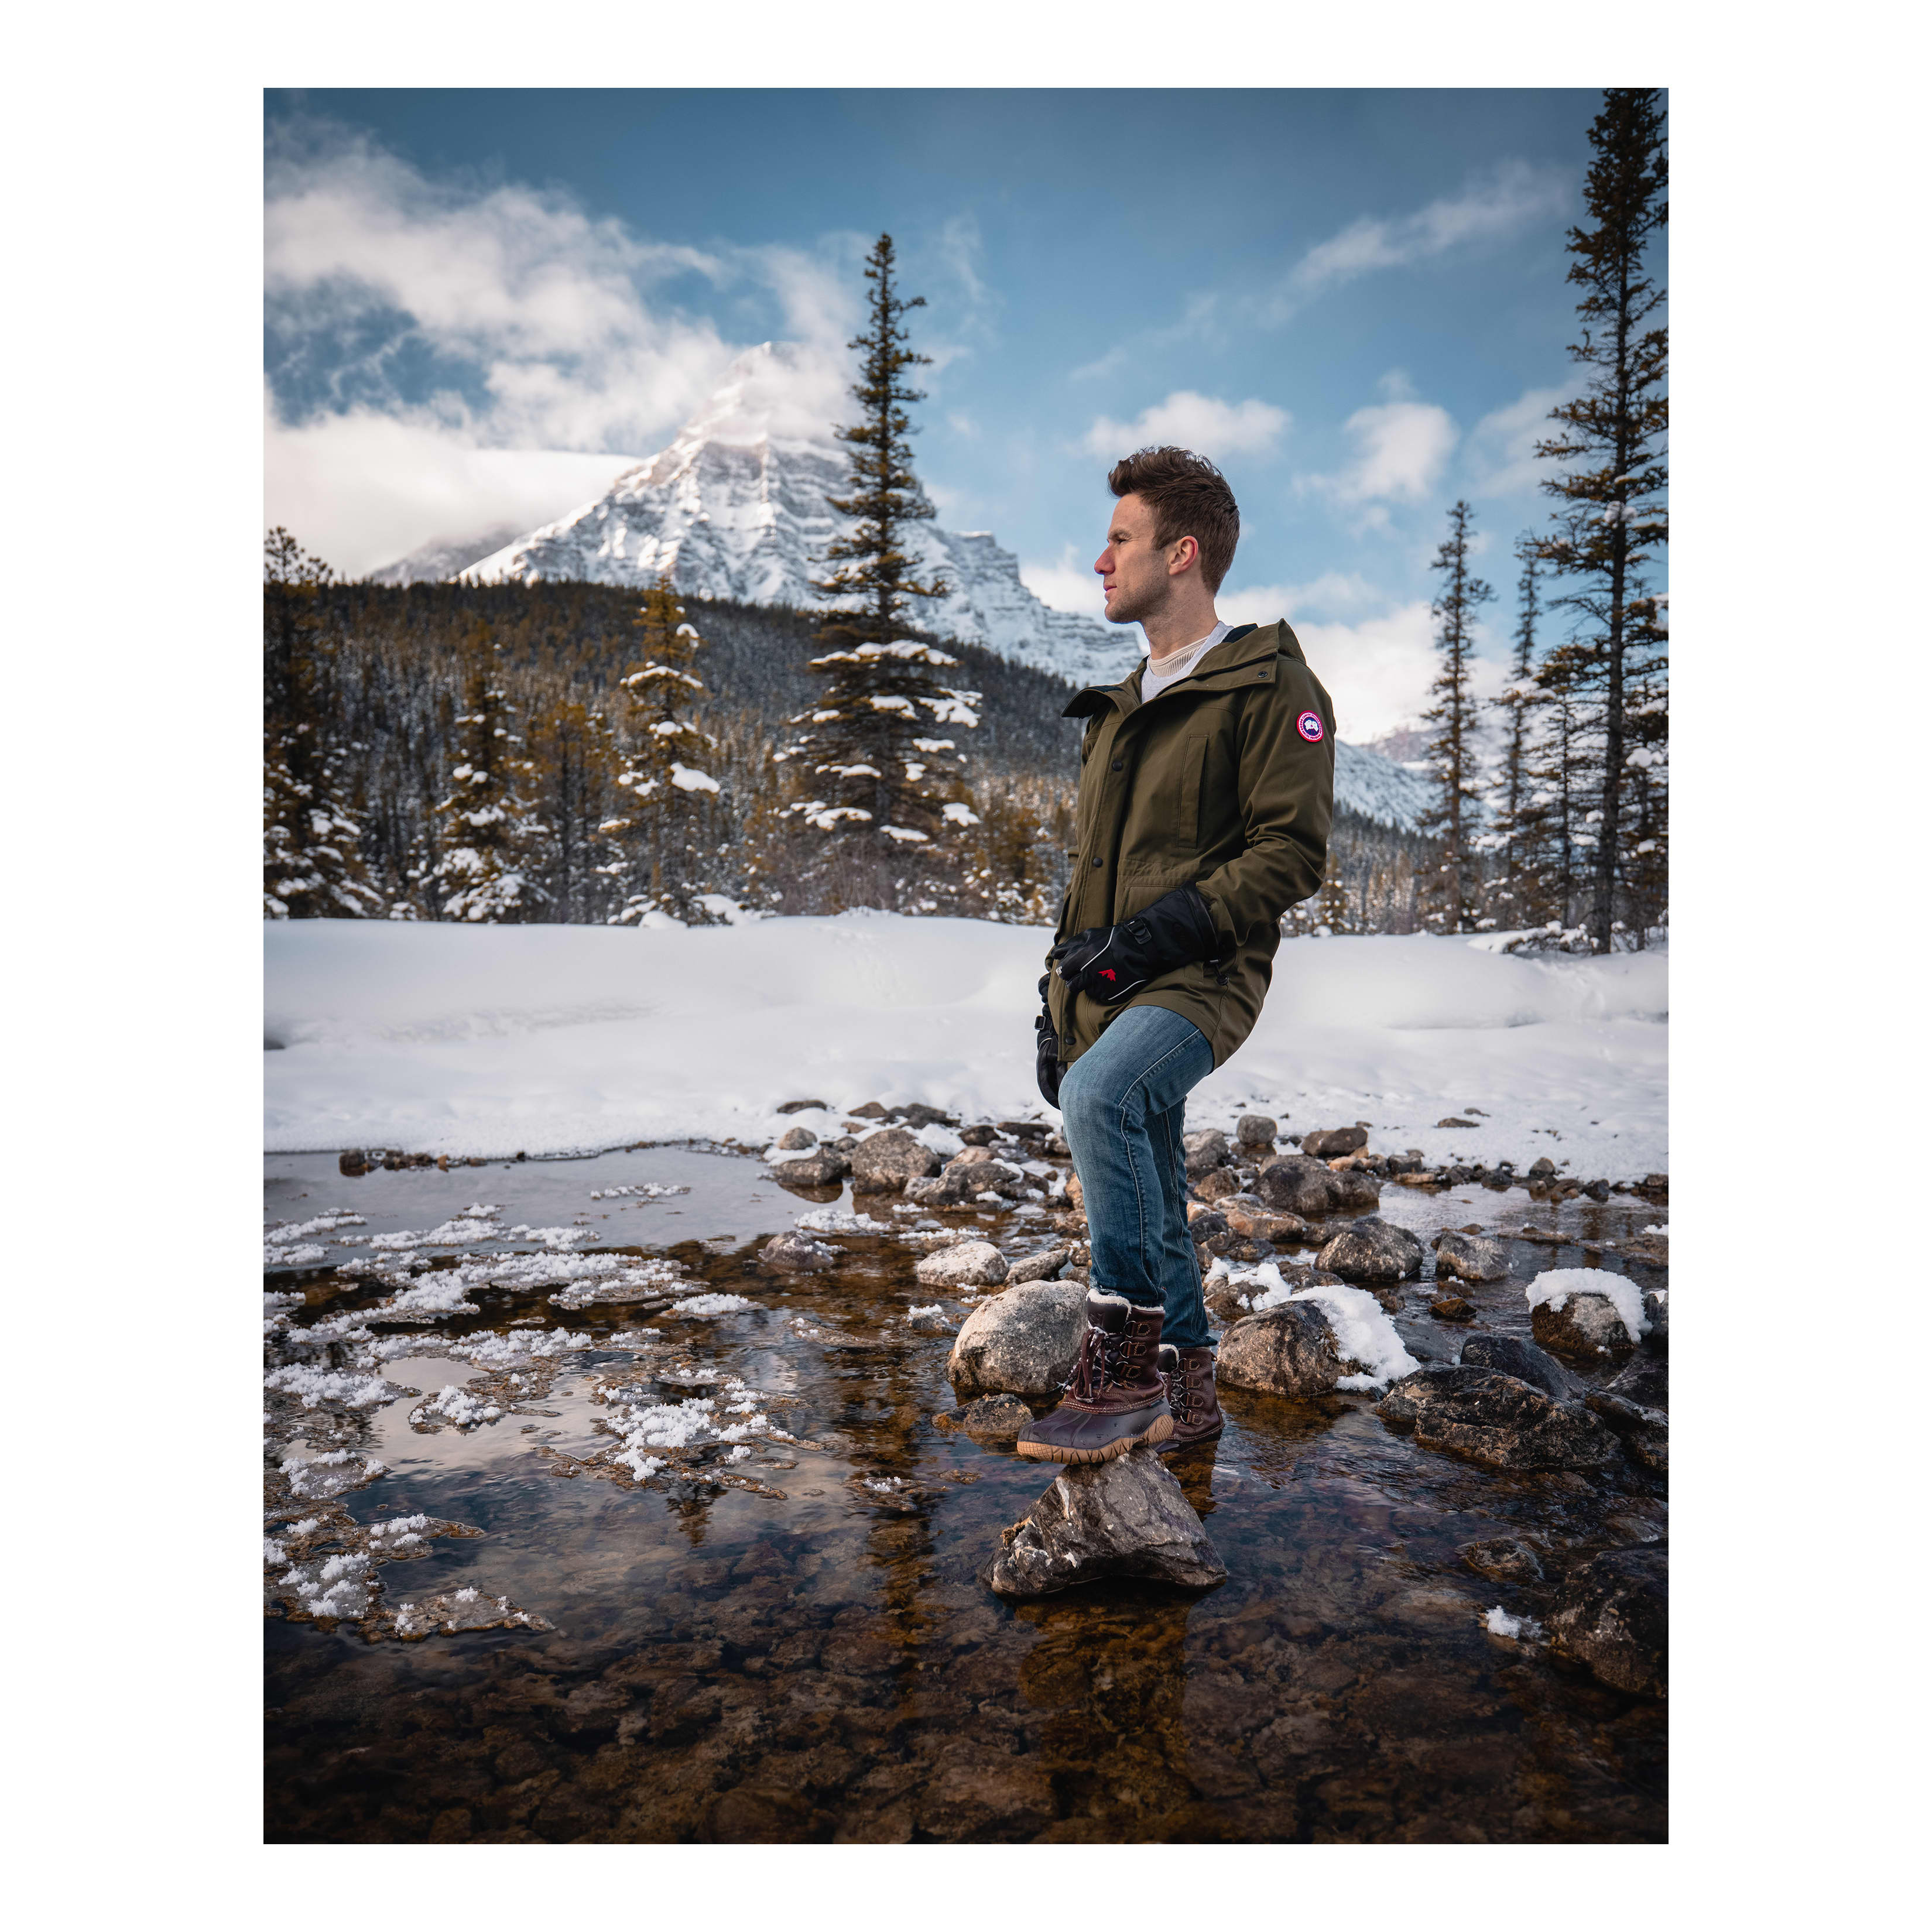 Baffin® Men’s Yellowknife Winter Boot - lifestyle